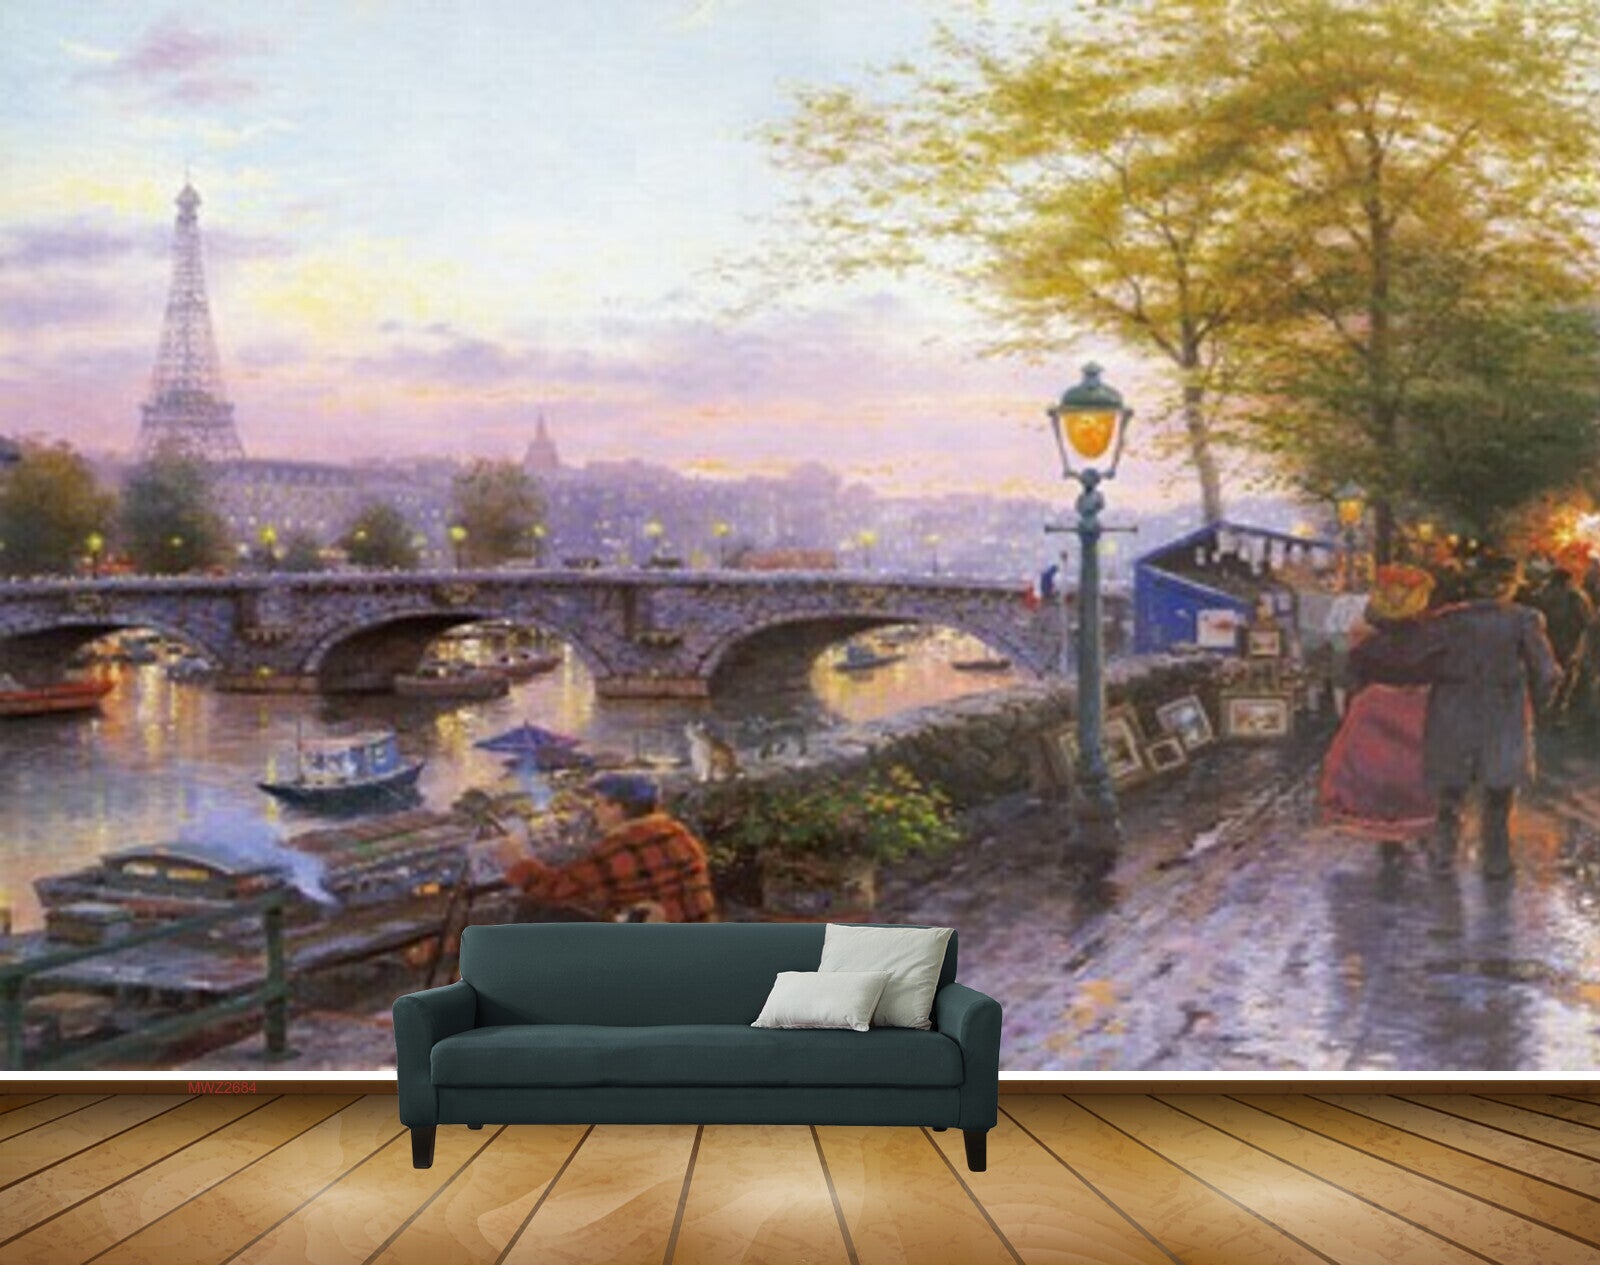 Avikalp MWZ2684 City Tower Trees River Boat Bridge Lamps Sky Men Dog Cat Painting HD Wallpaper